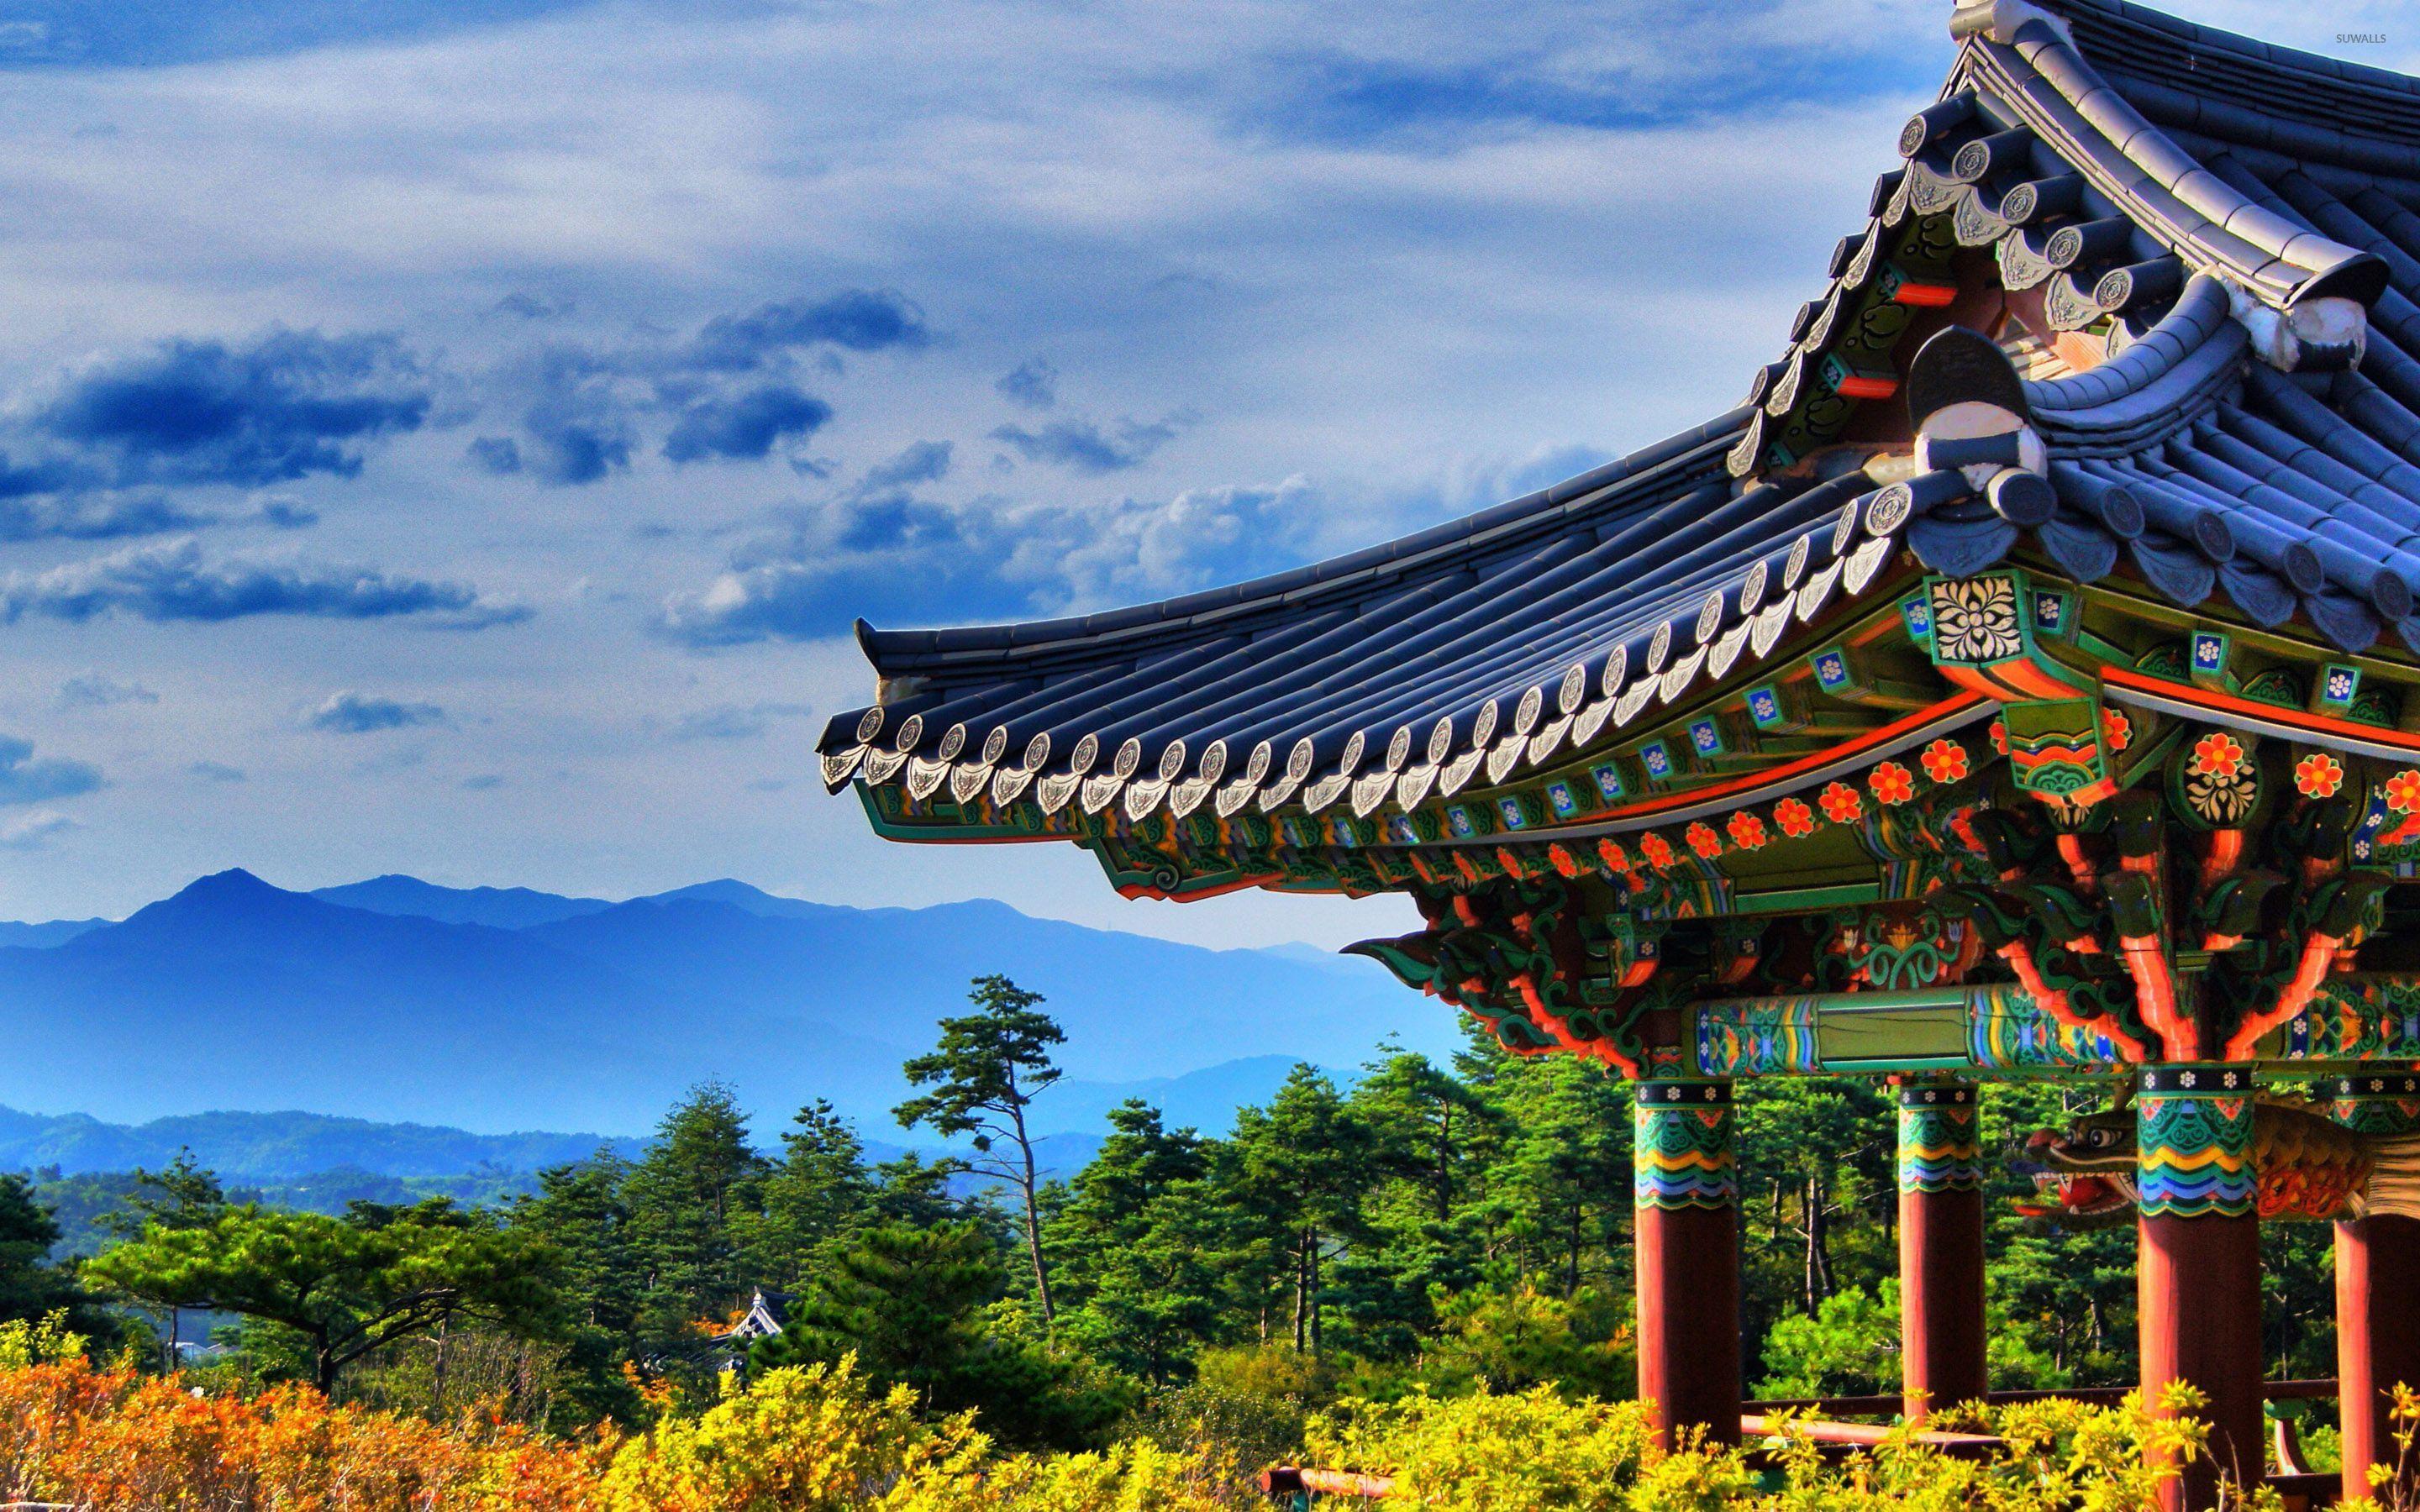 Скачать обои бесплатно Храм, Ландшафт, Храмы, Корея, Религиозные картинка на рабочий стол ПК